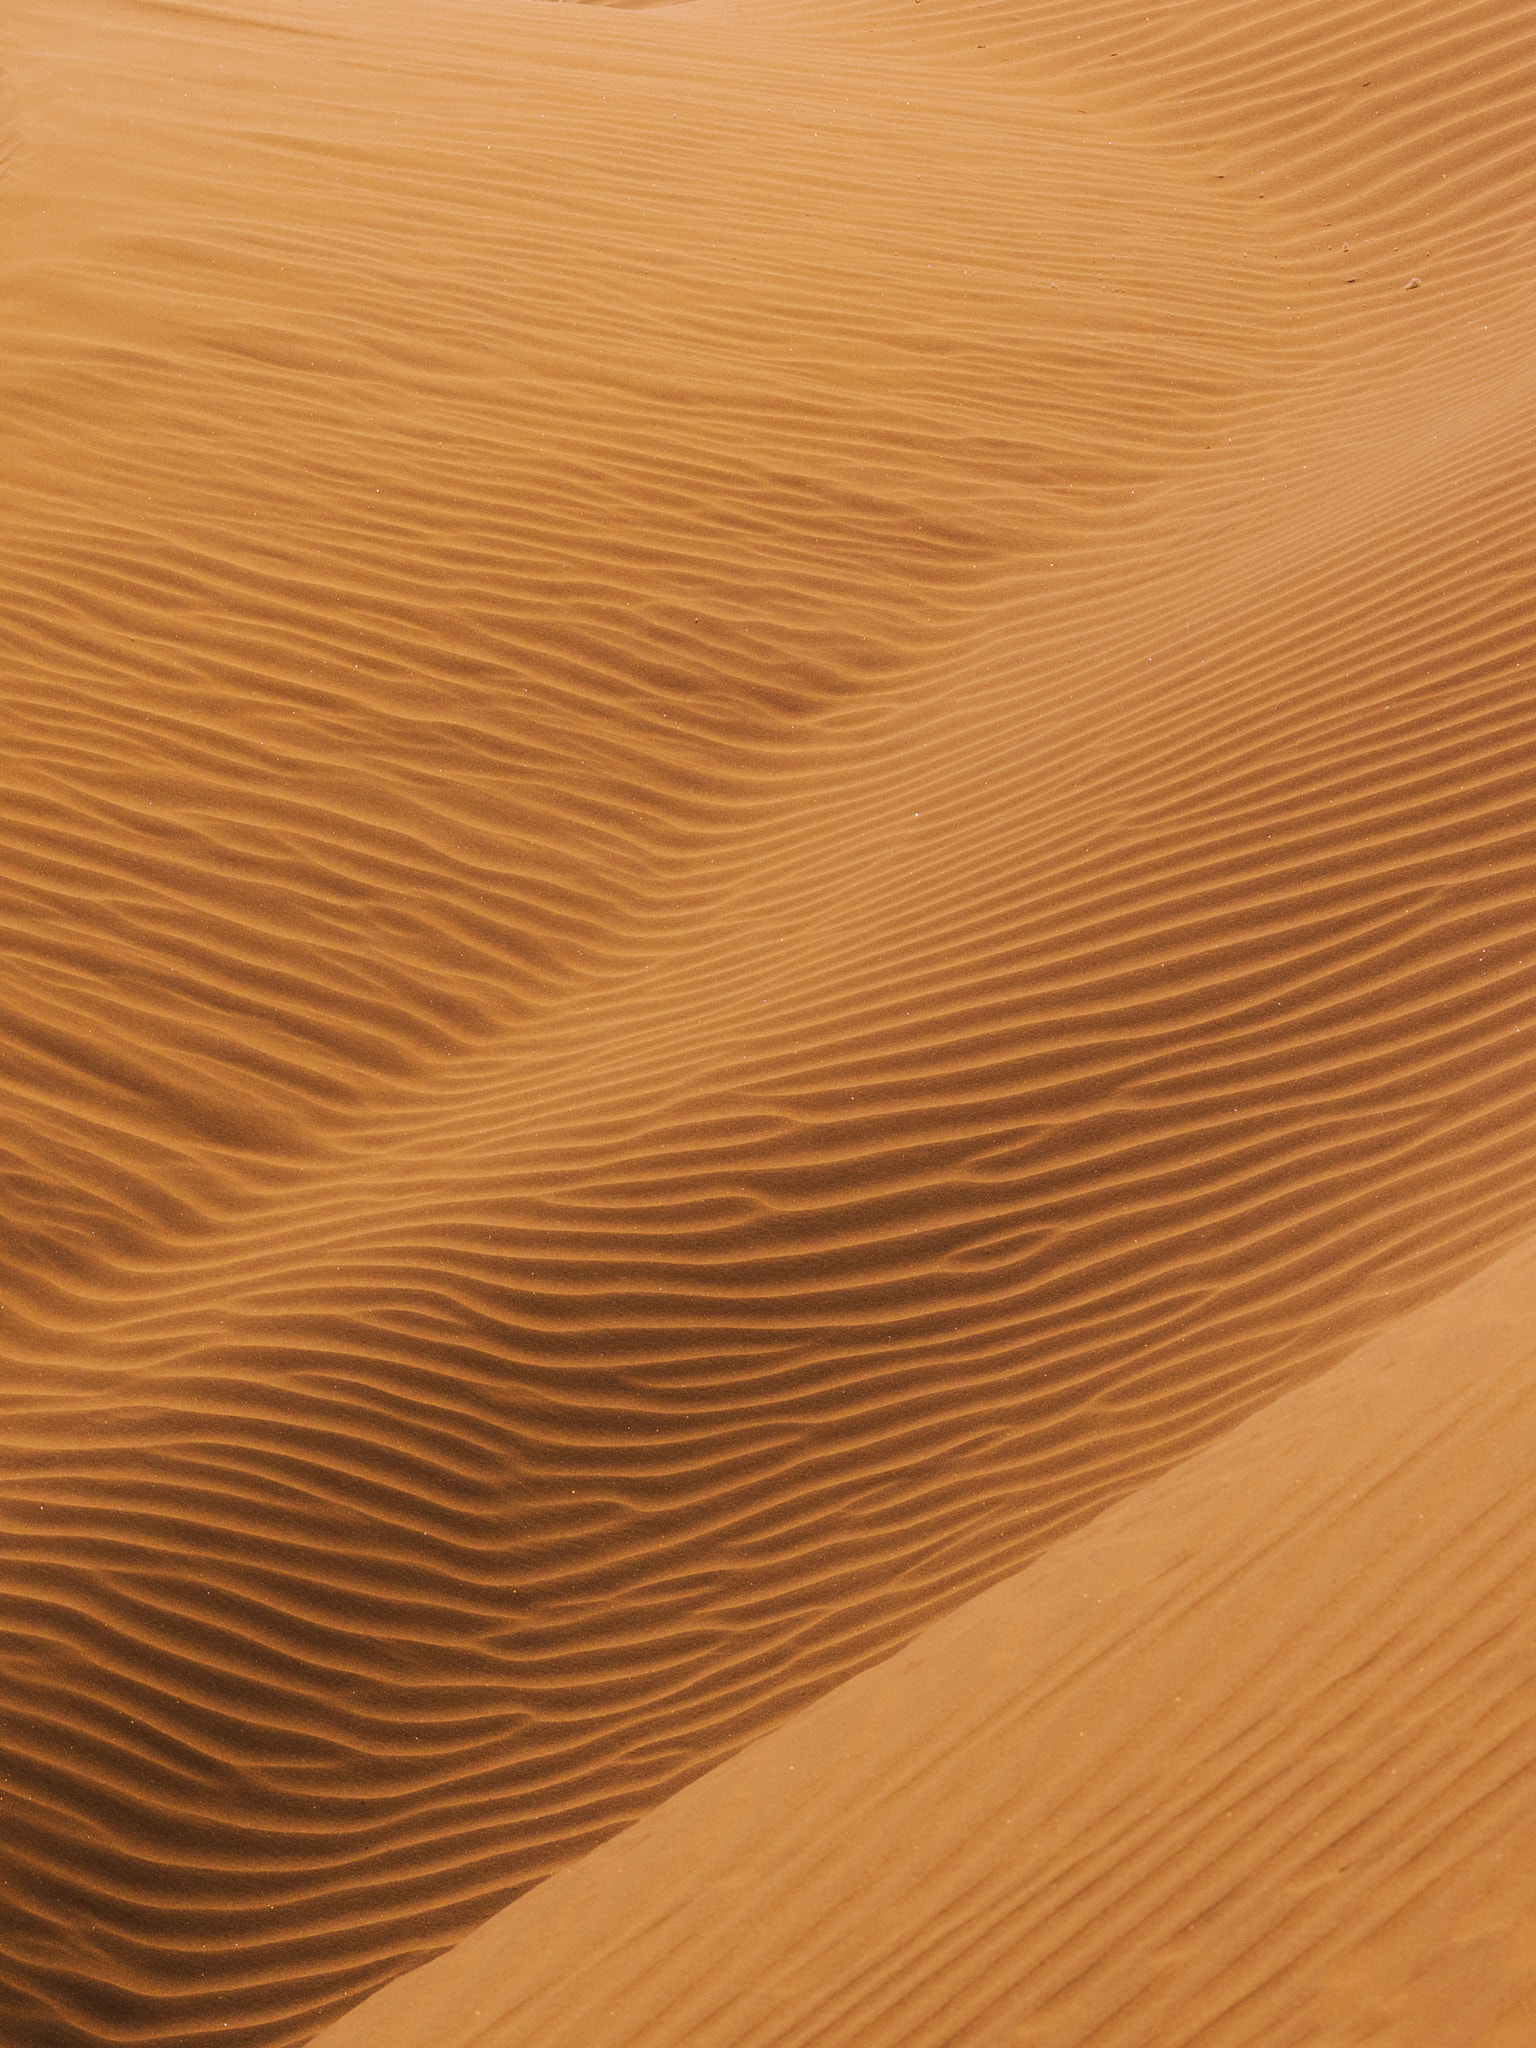 Texture of Sand Dunes